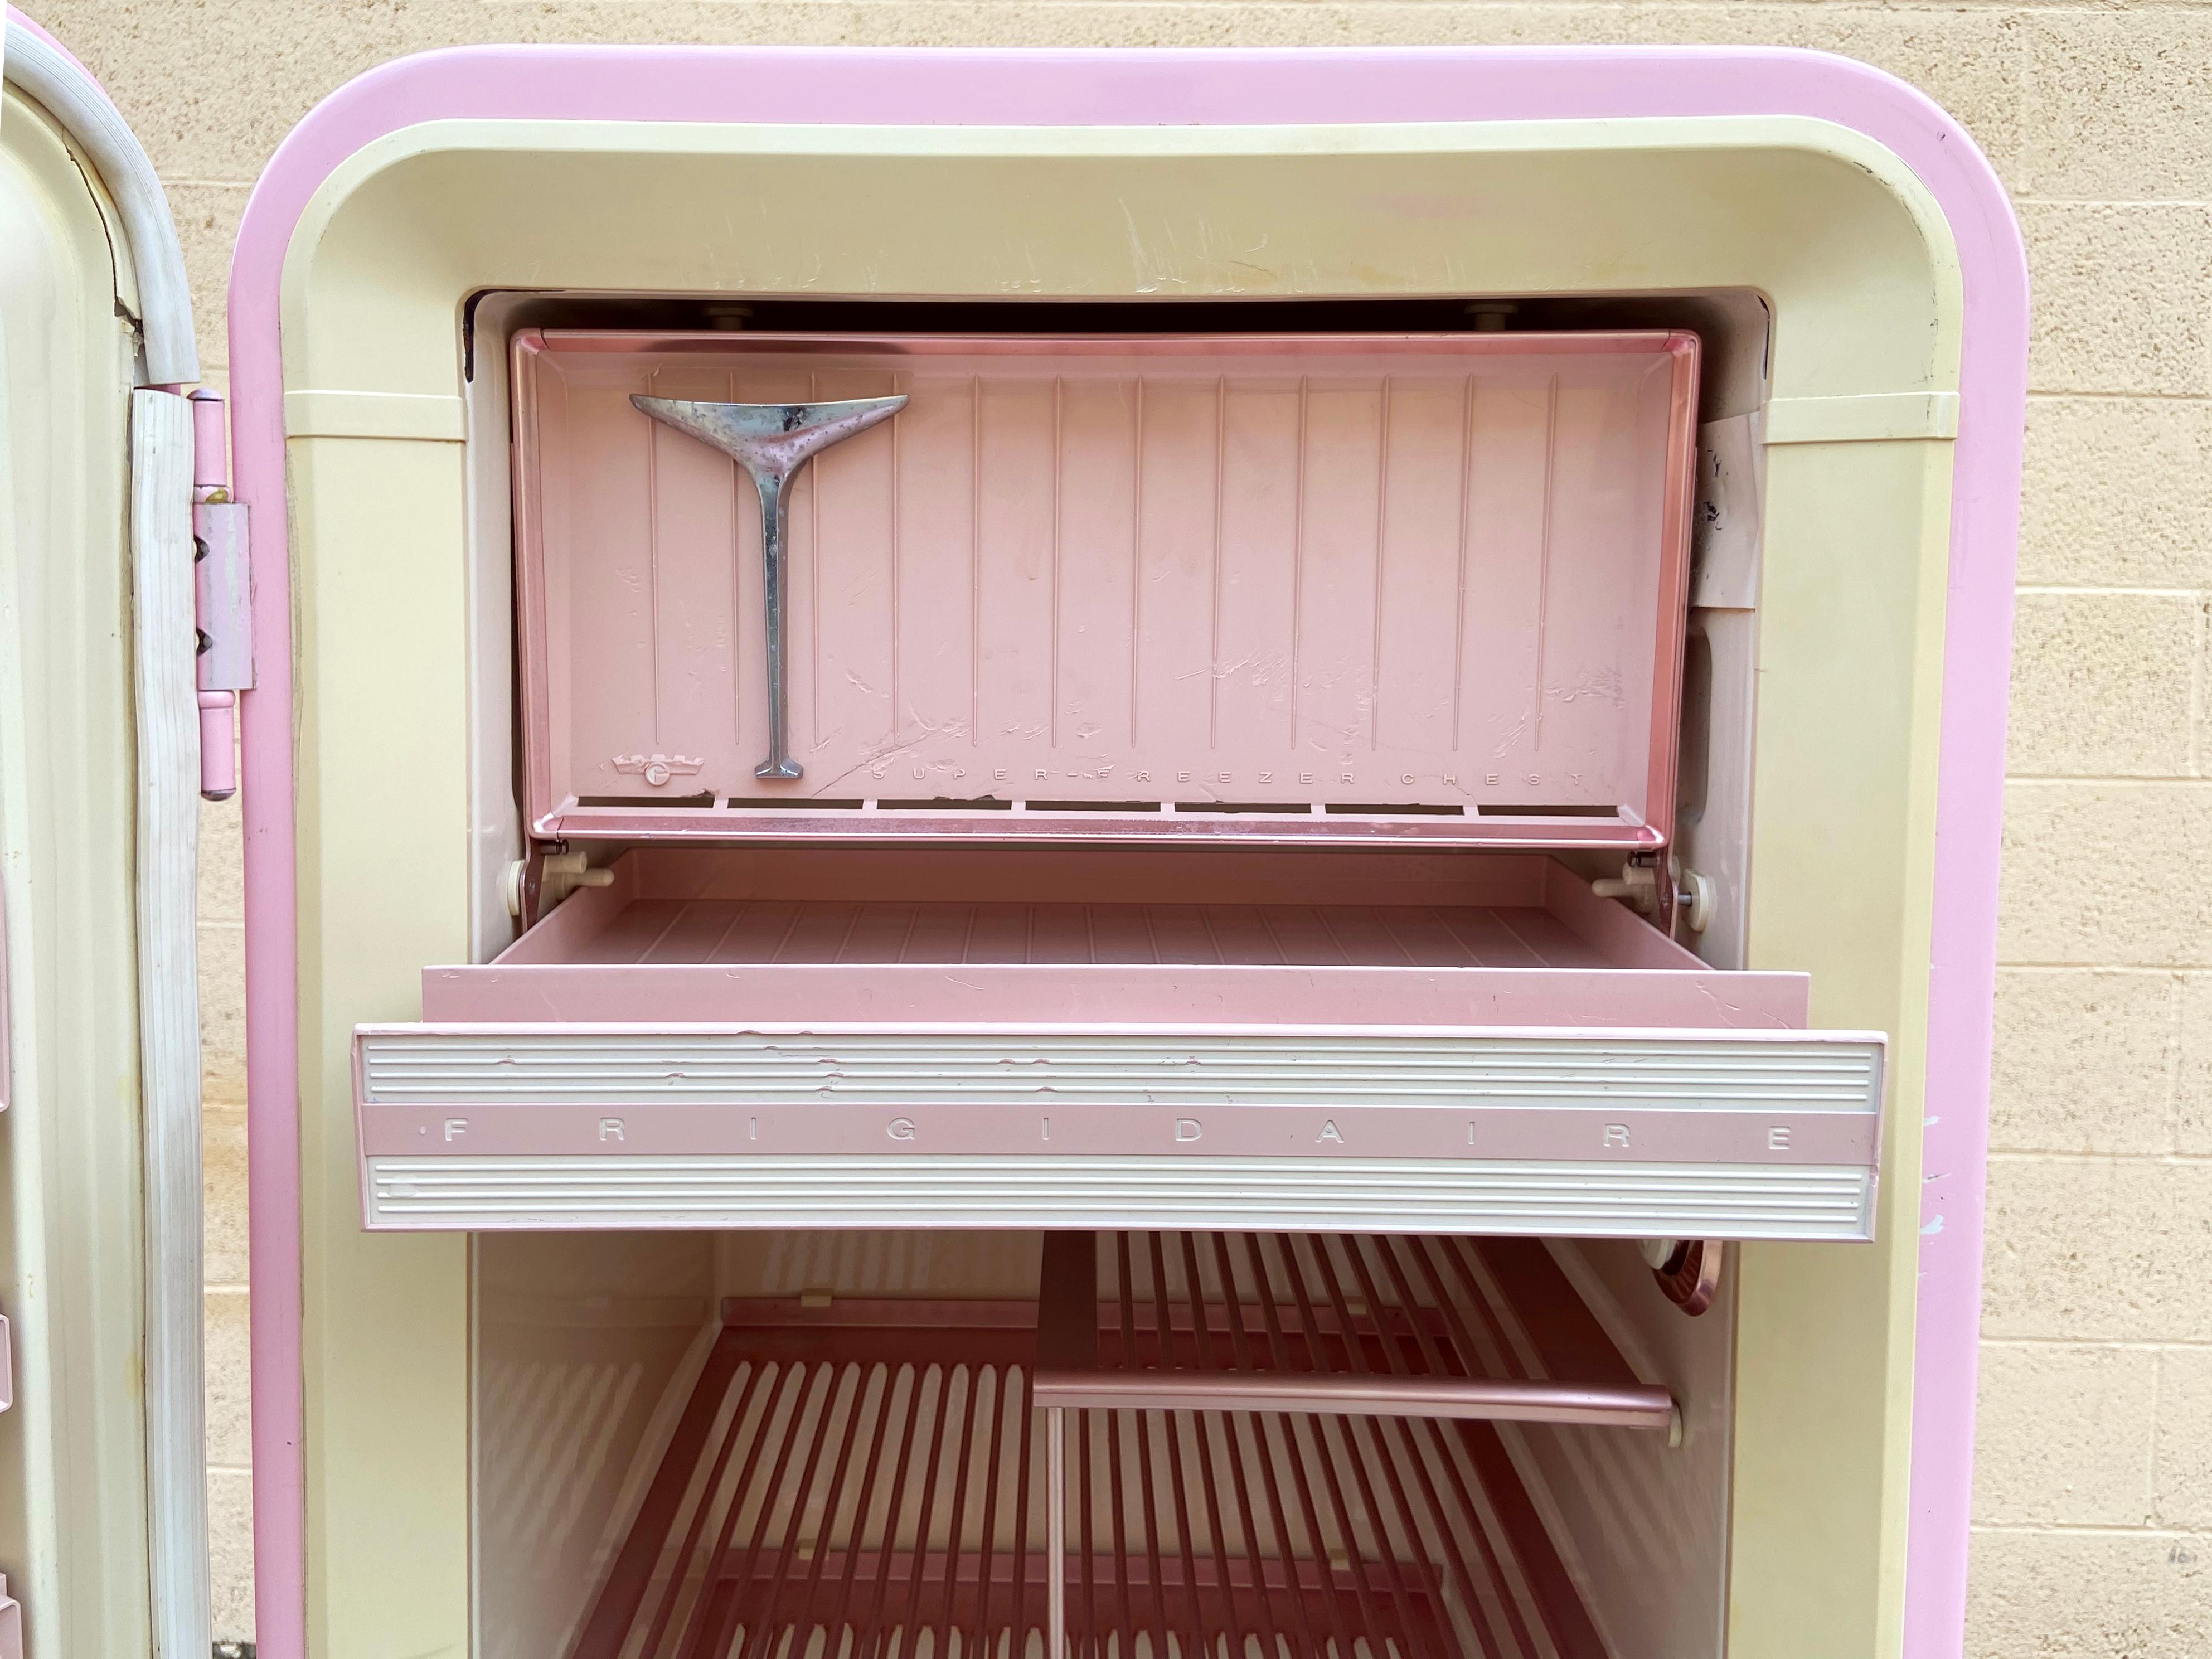 Mid-20th Century 1950s Pink Fridgedaire Refrigerator